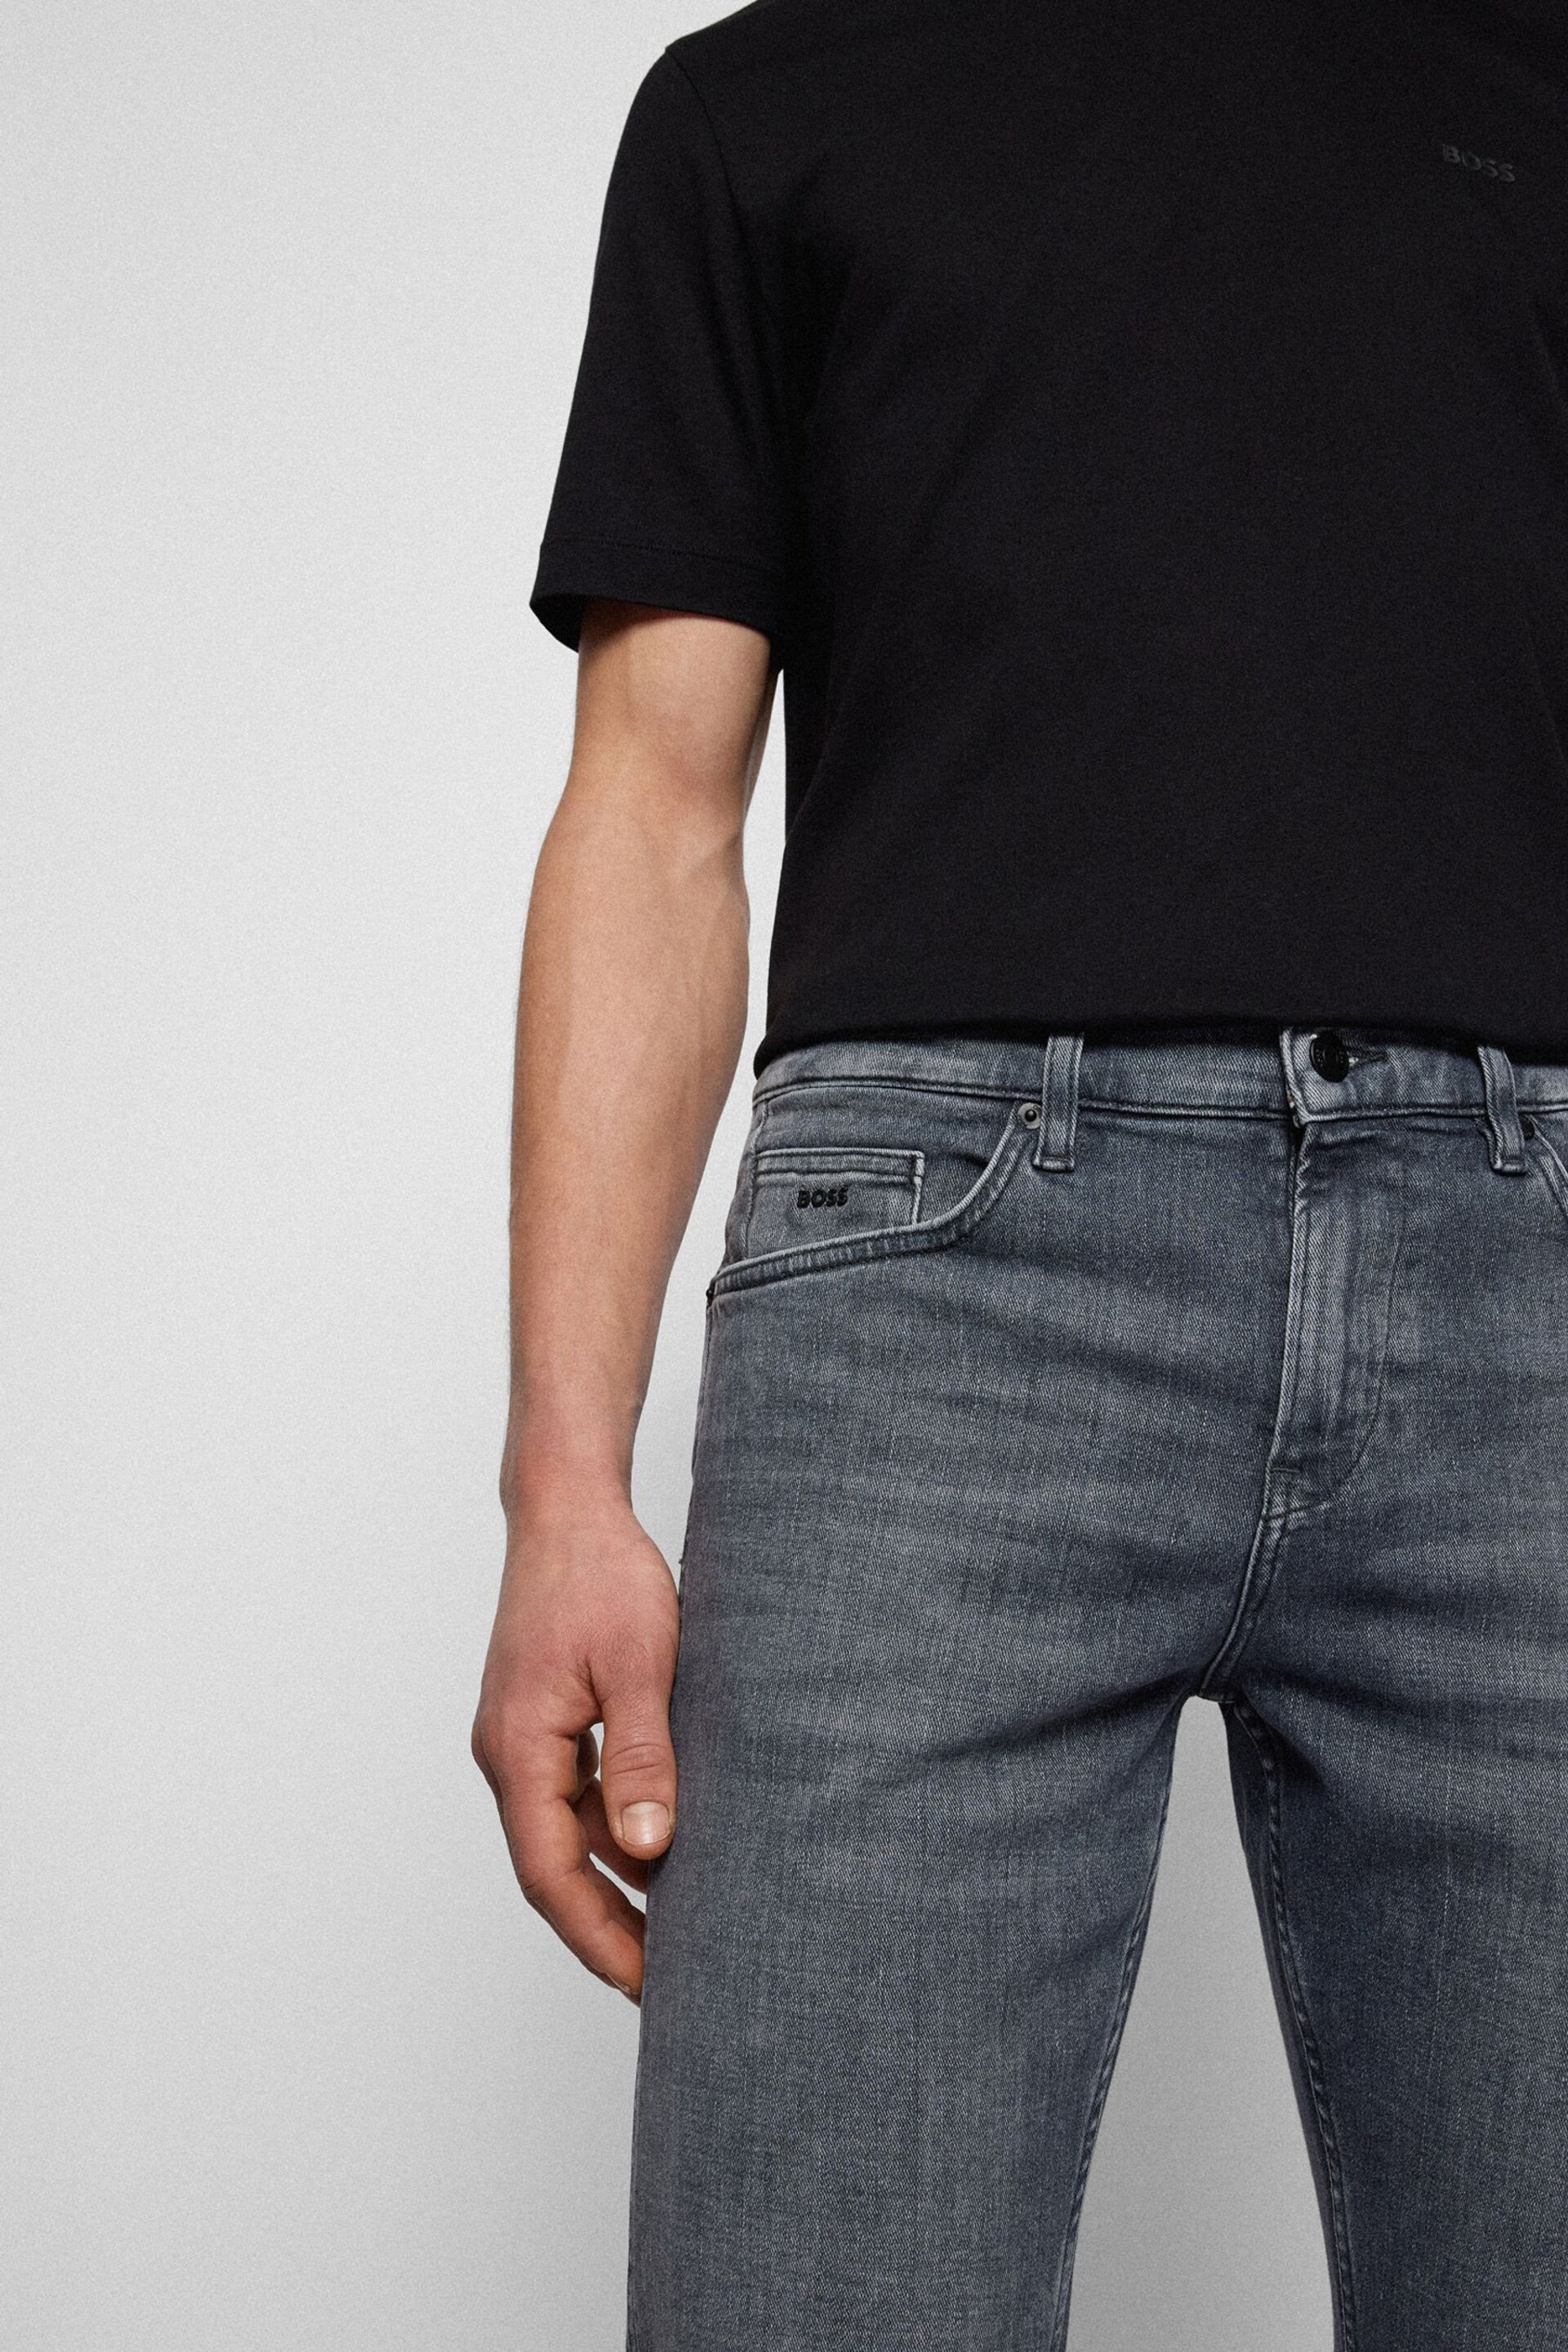 BOSS Light Grey Delaware Slim Fit Jeans - Image 4 of 4